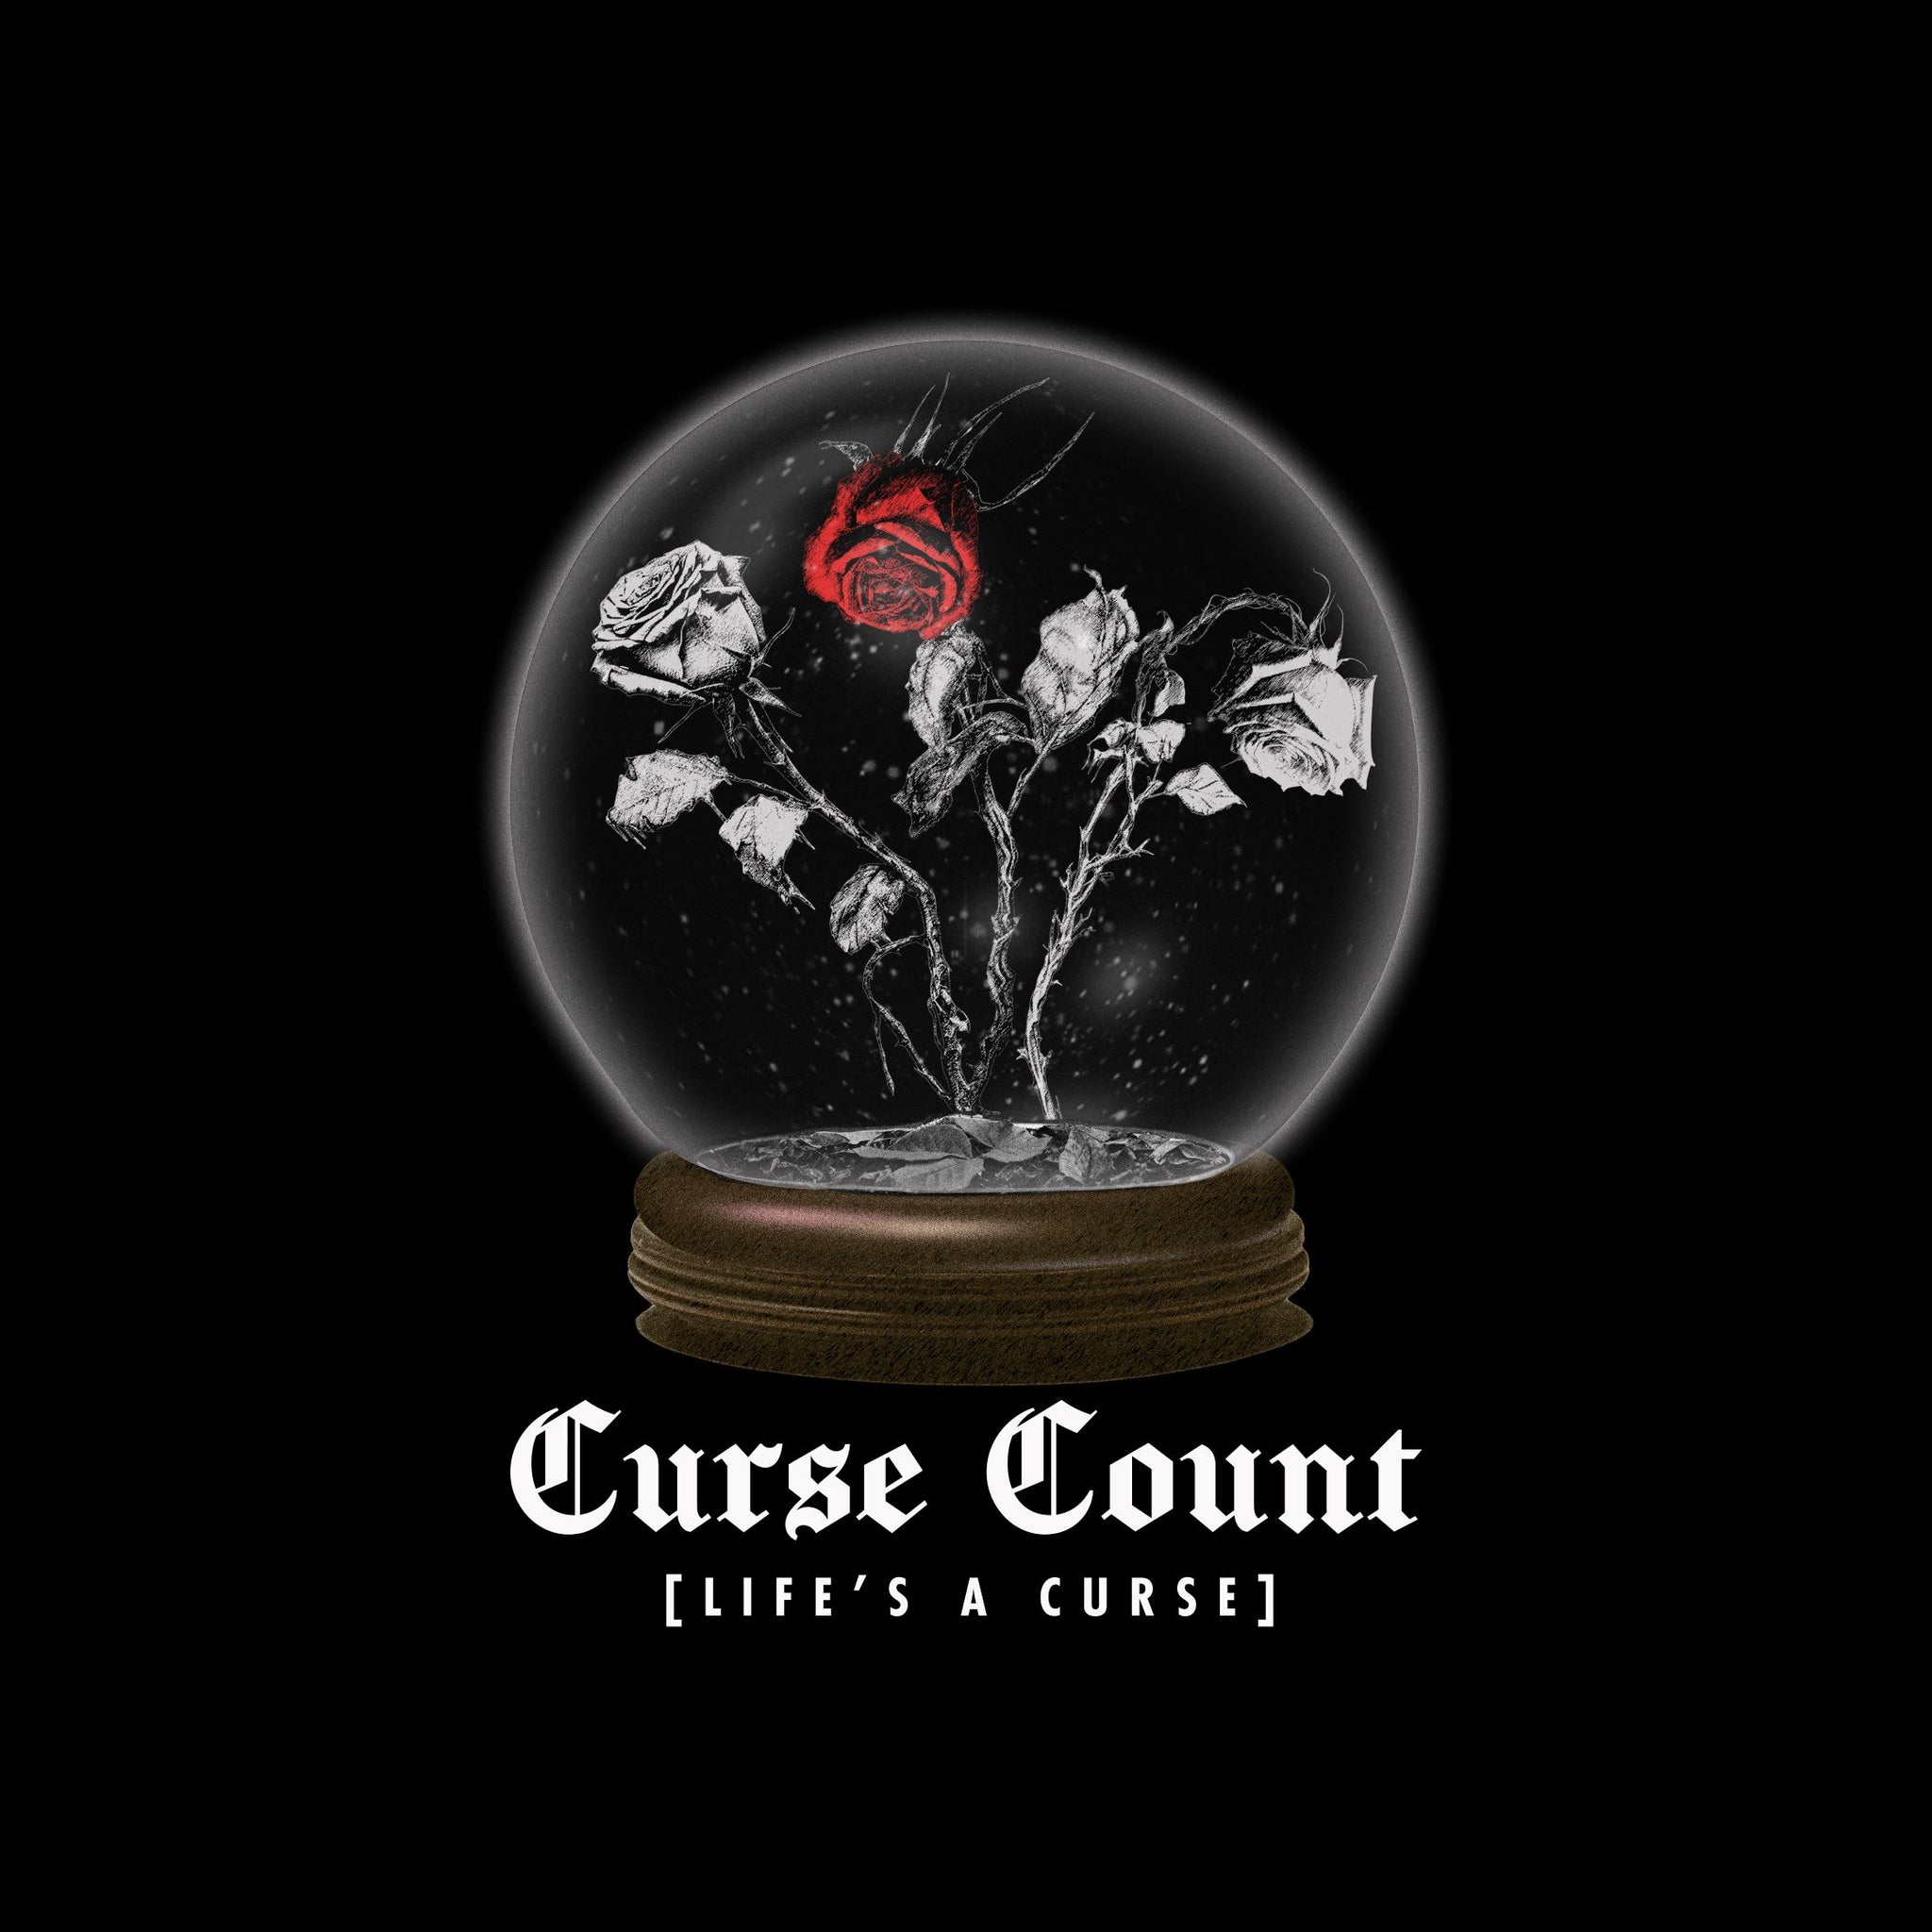 Curse Count